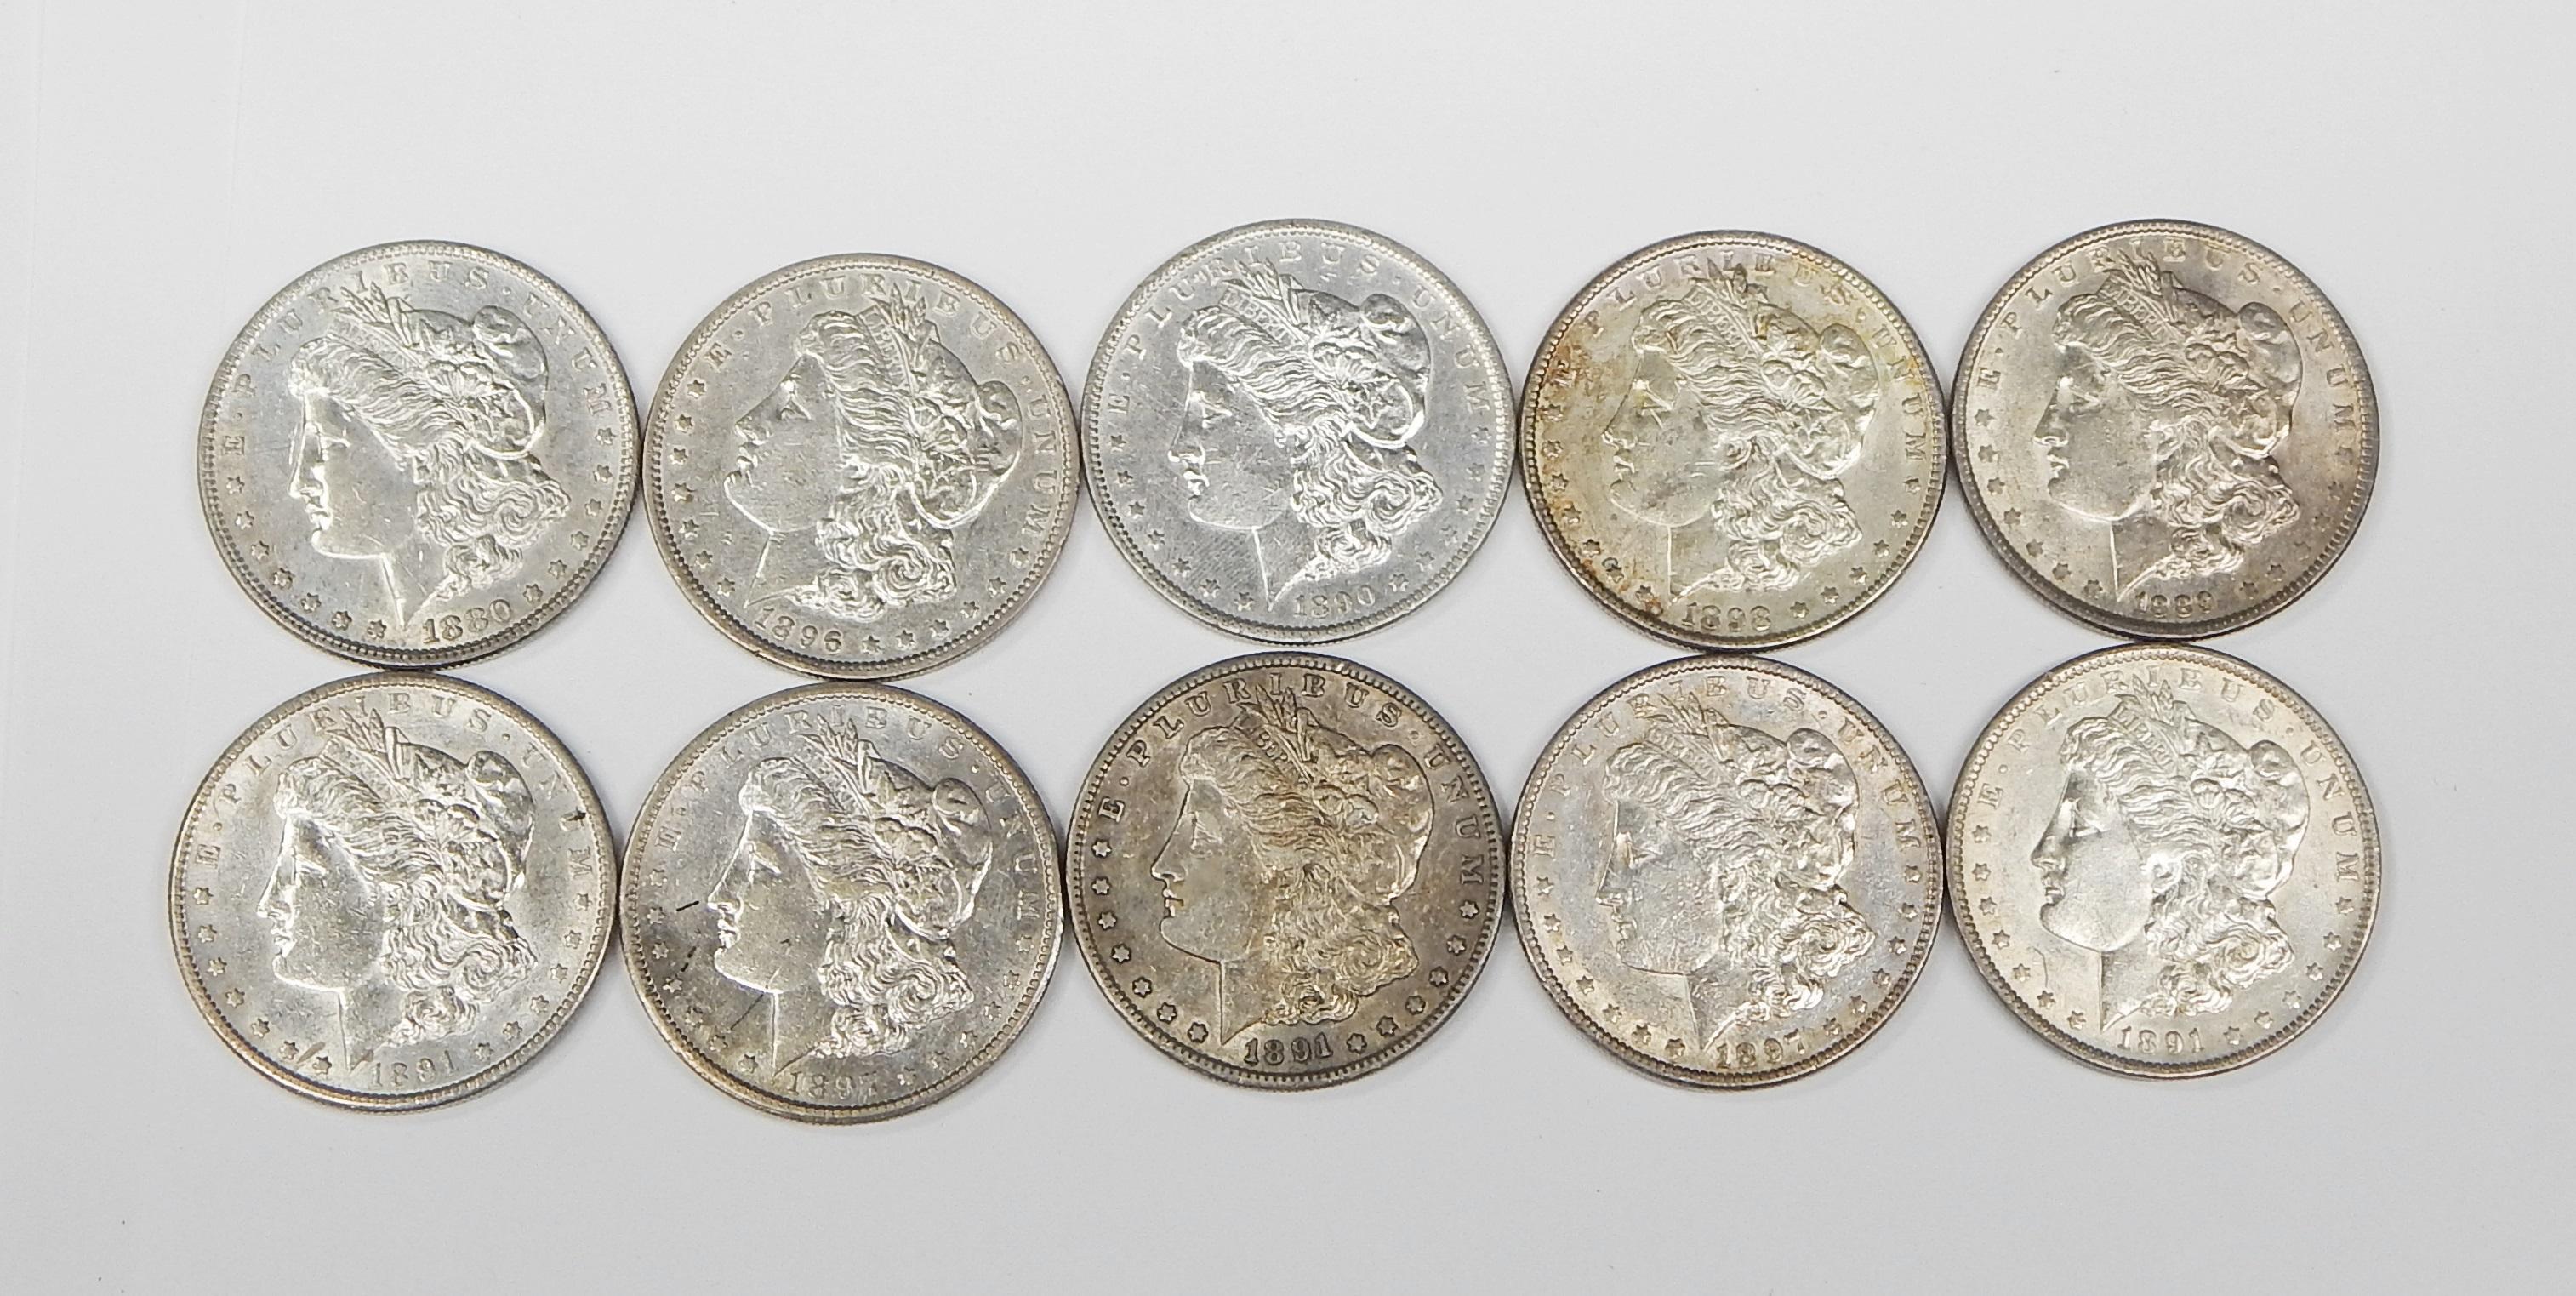 10 MORGAN DOLLARS - 1880, 1889, 1890, 1891, (2) 1891-S, 1896, 1897, 1897-S, 1898